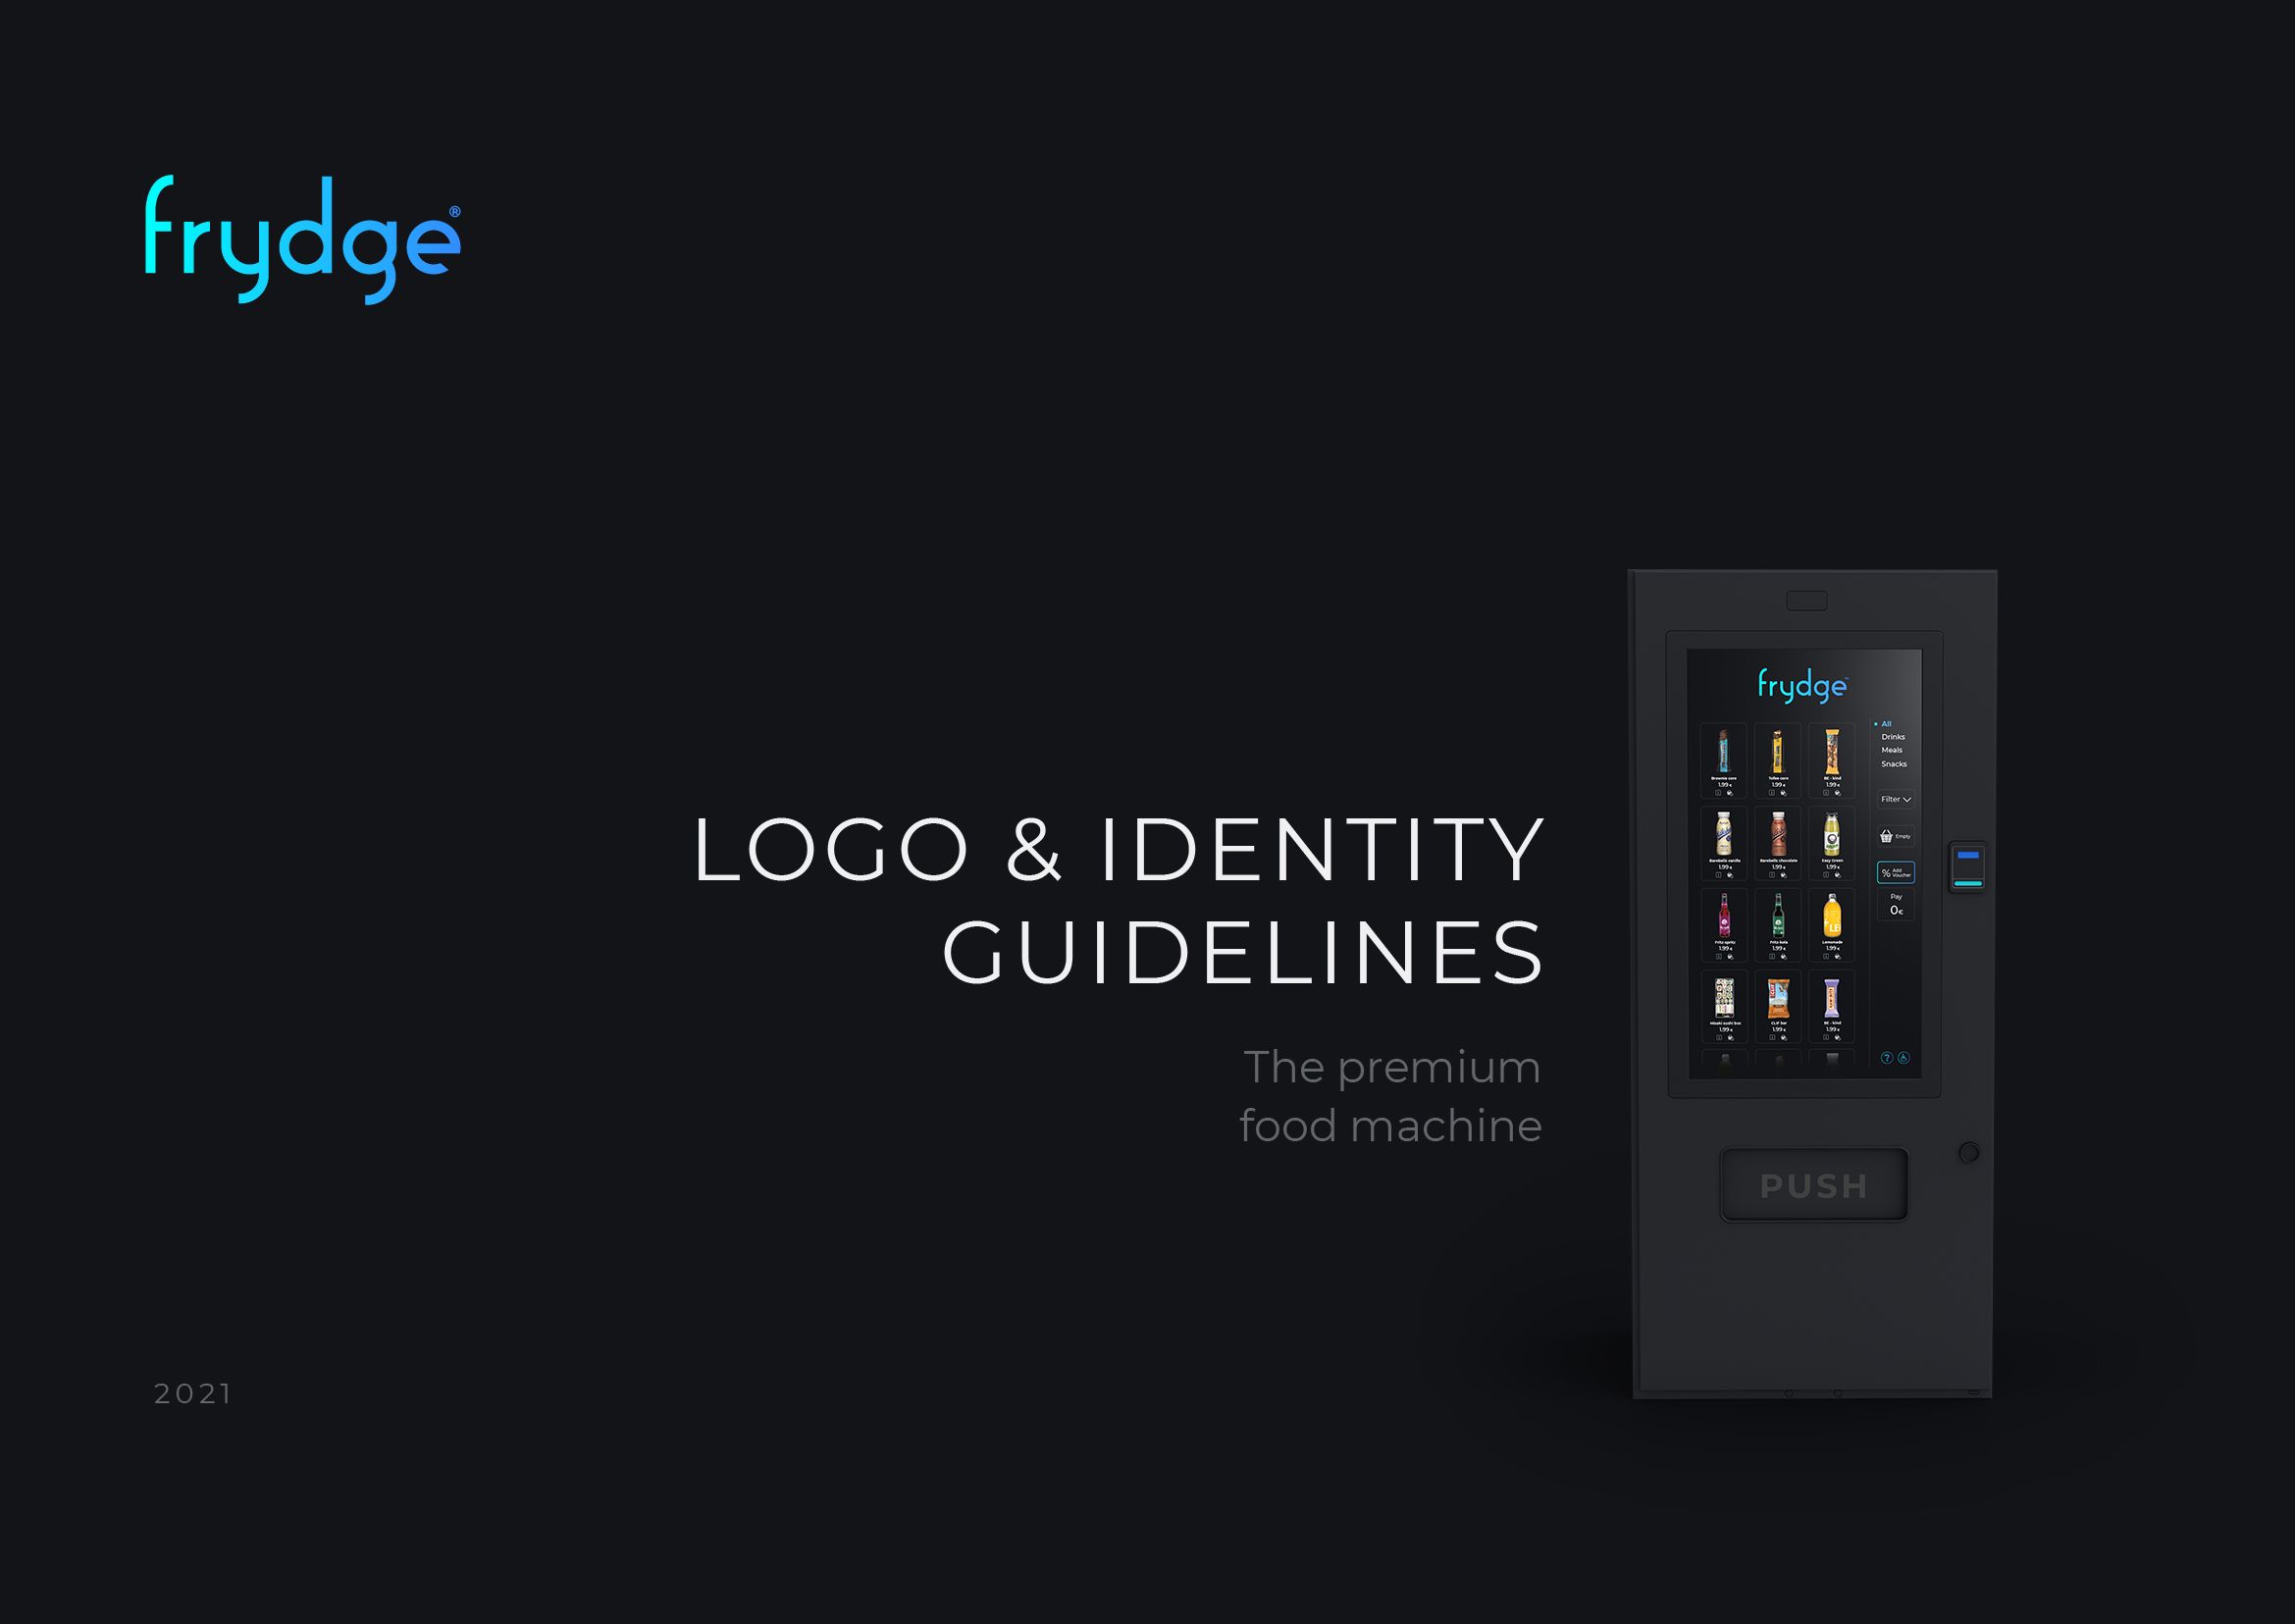 Frydge logo and identity design